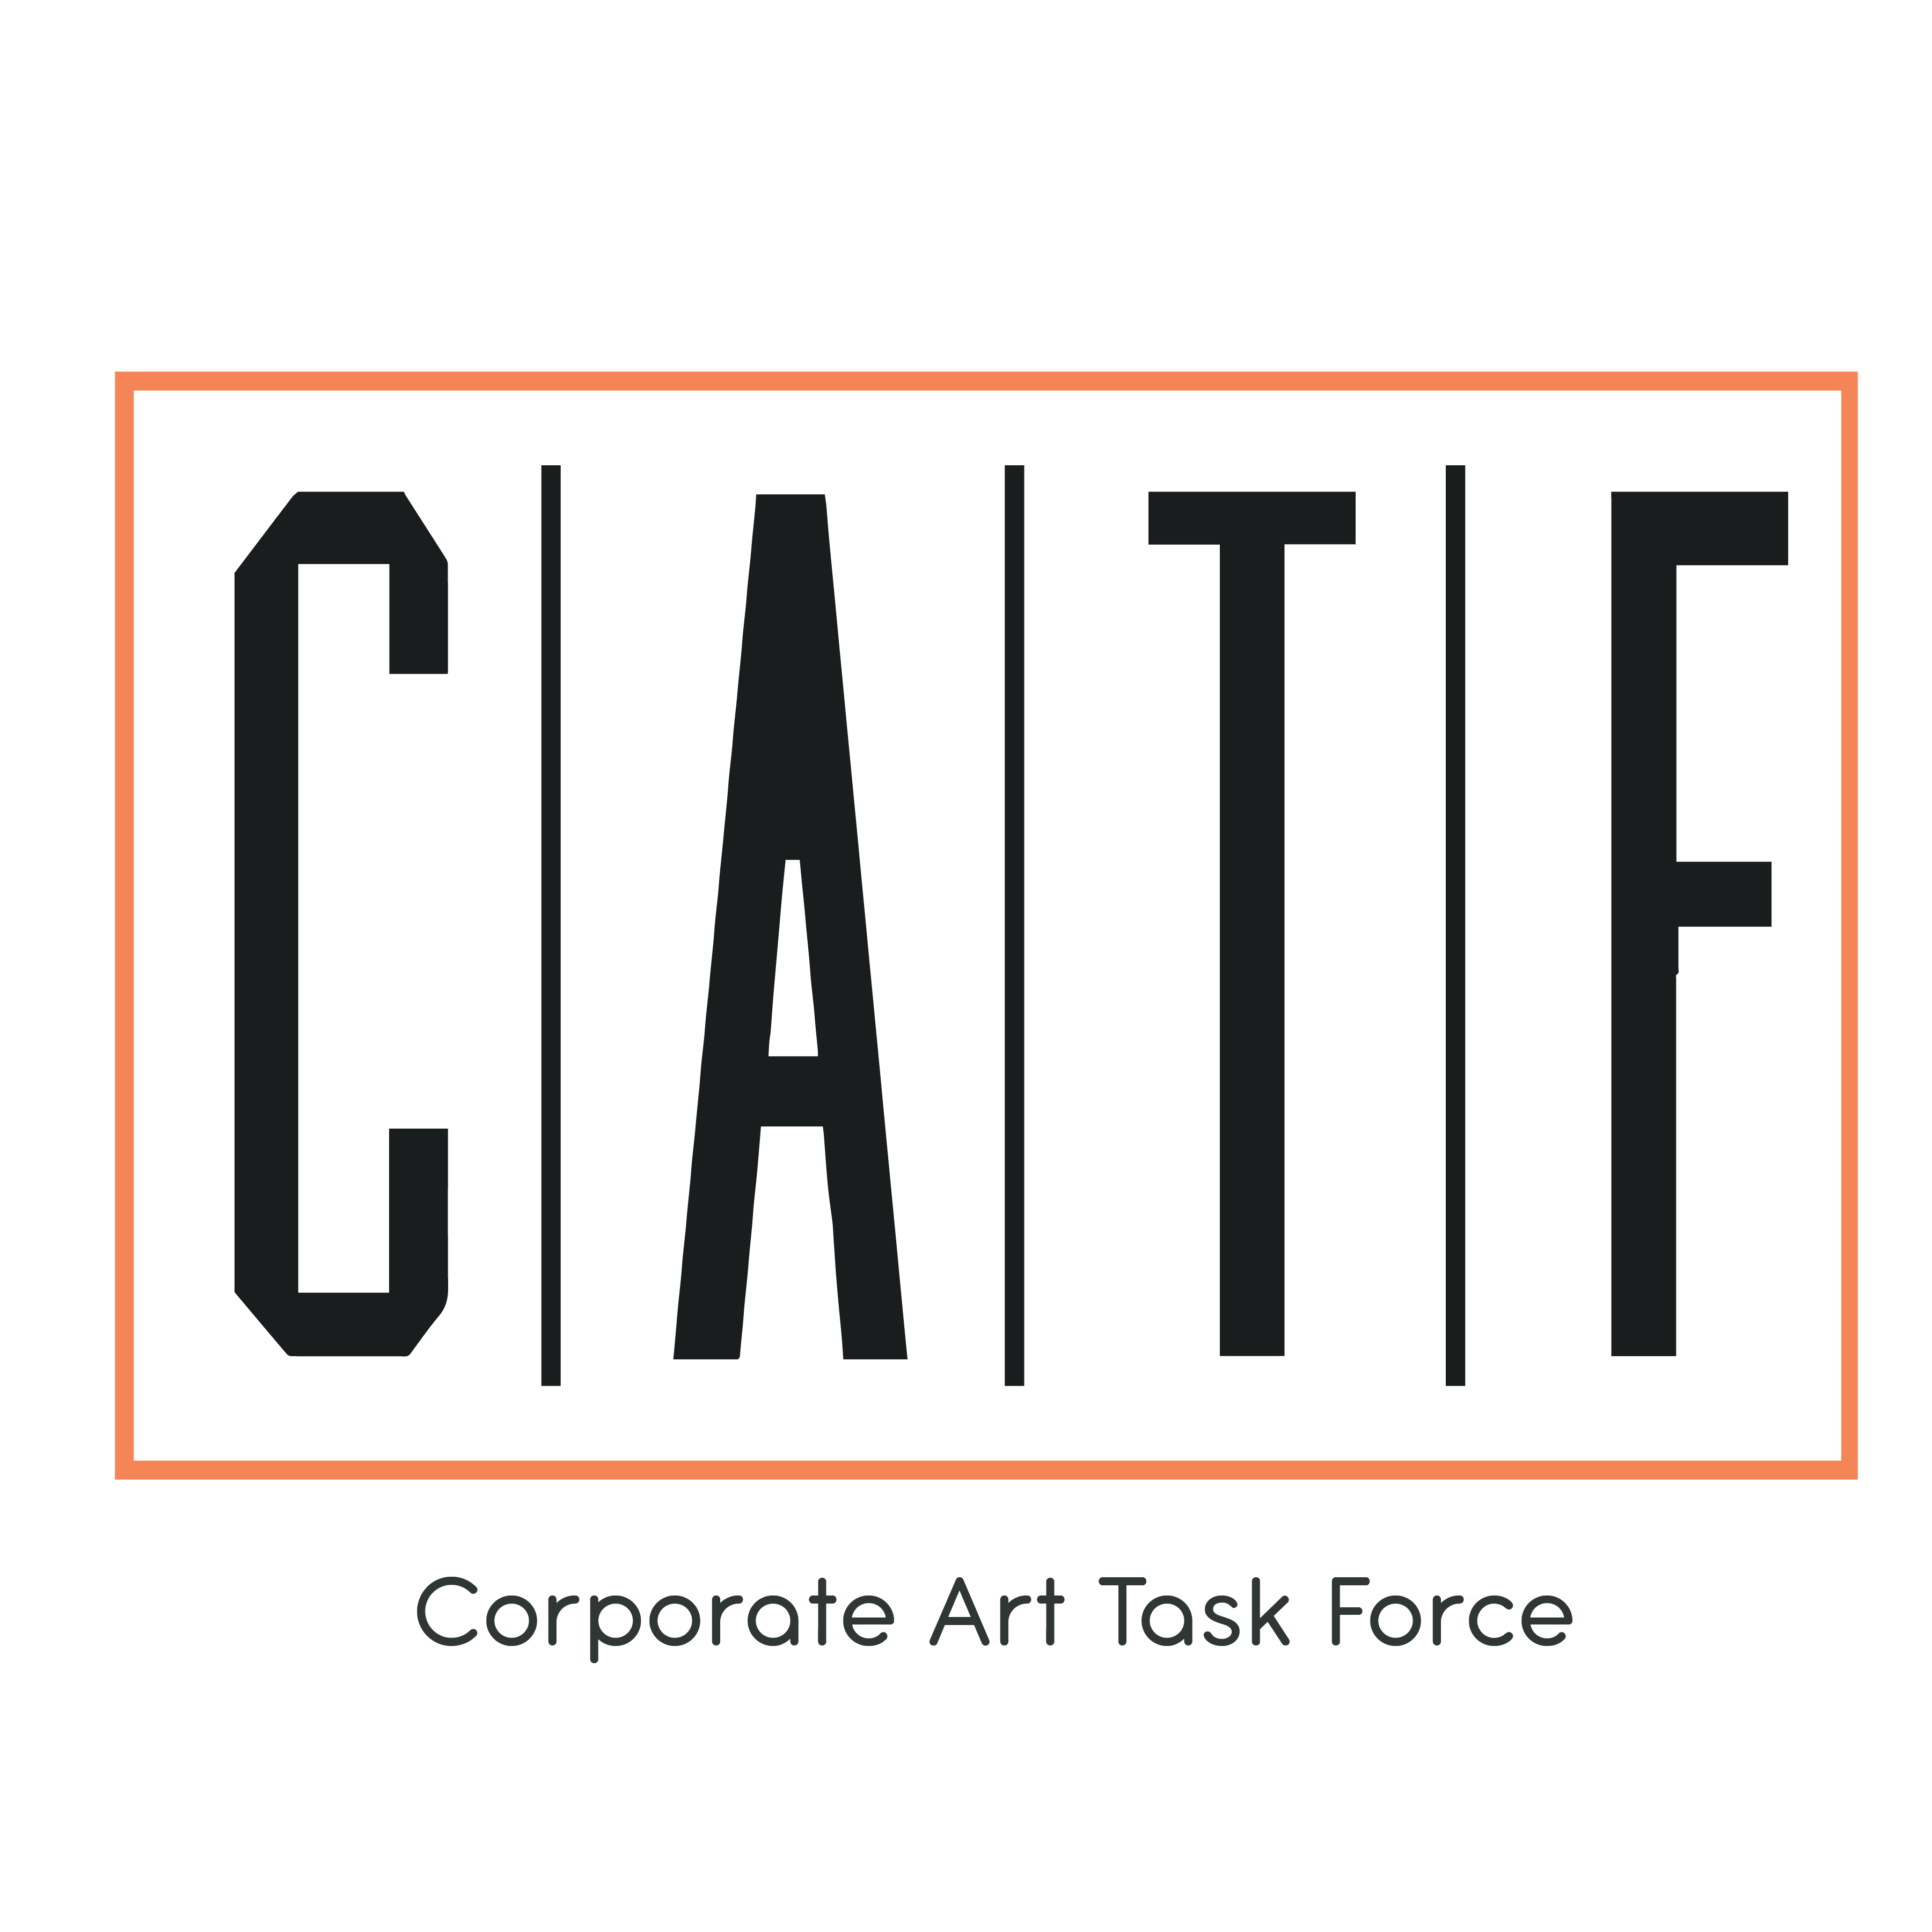 Corporate Art Task Force